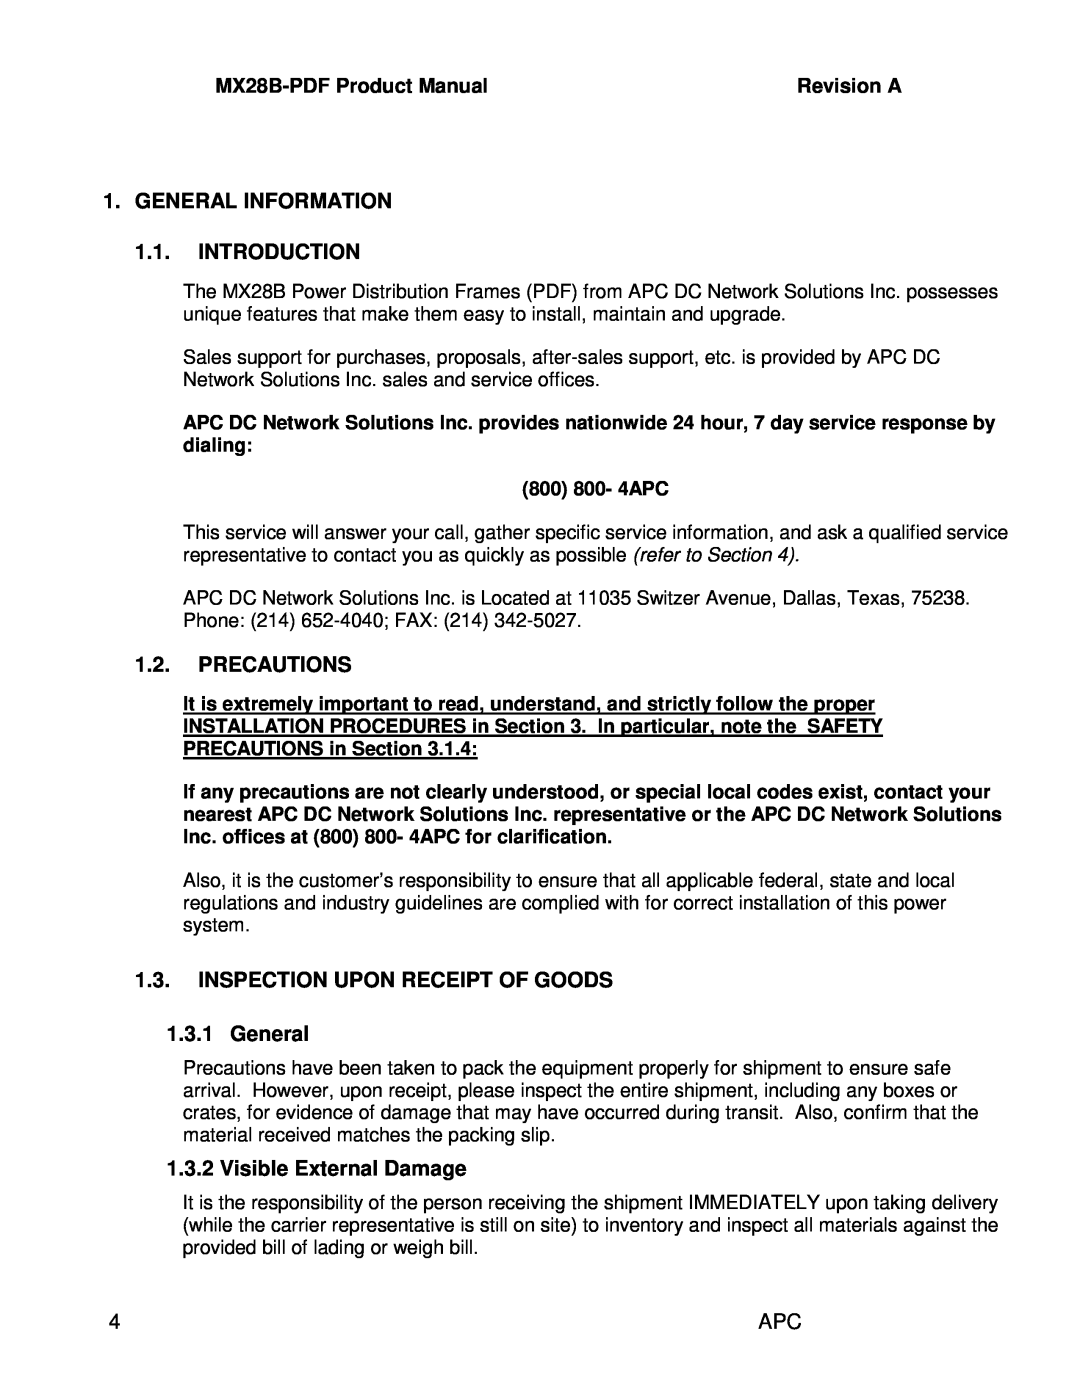 American Power Conversion MX28B-PDF manual GENERAL INFORMATION 1.1. INTRODUCTION, Precautions, Visible External Damage 